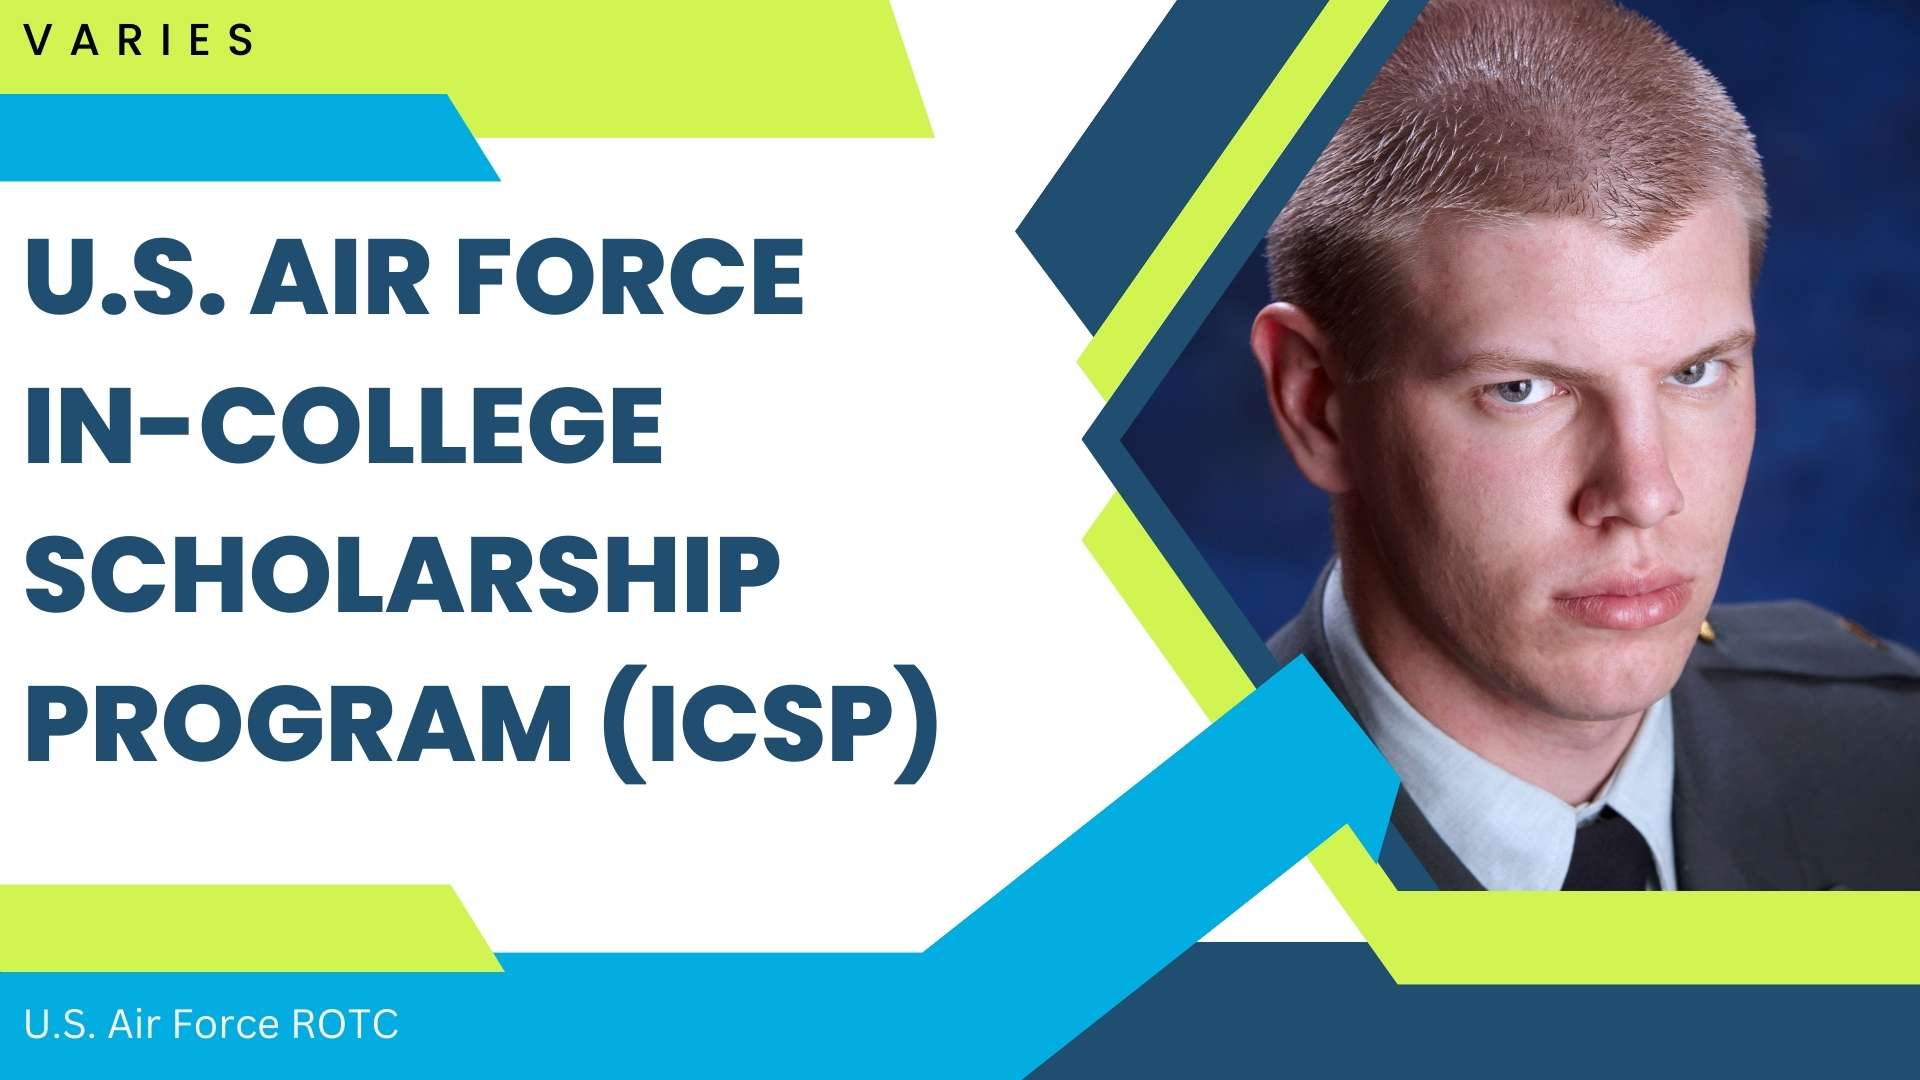 U.S. Air Force In-College Scholarship Program (ICSP)